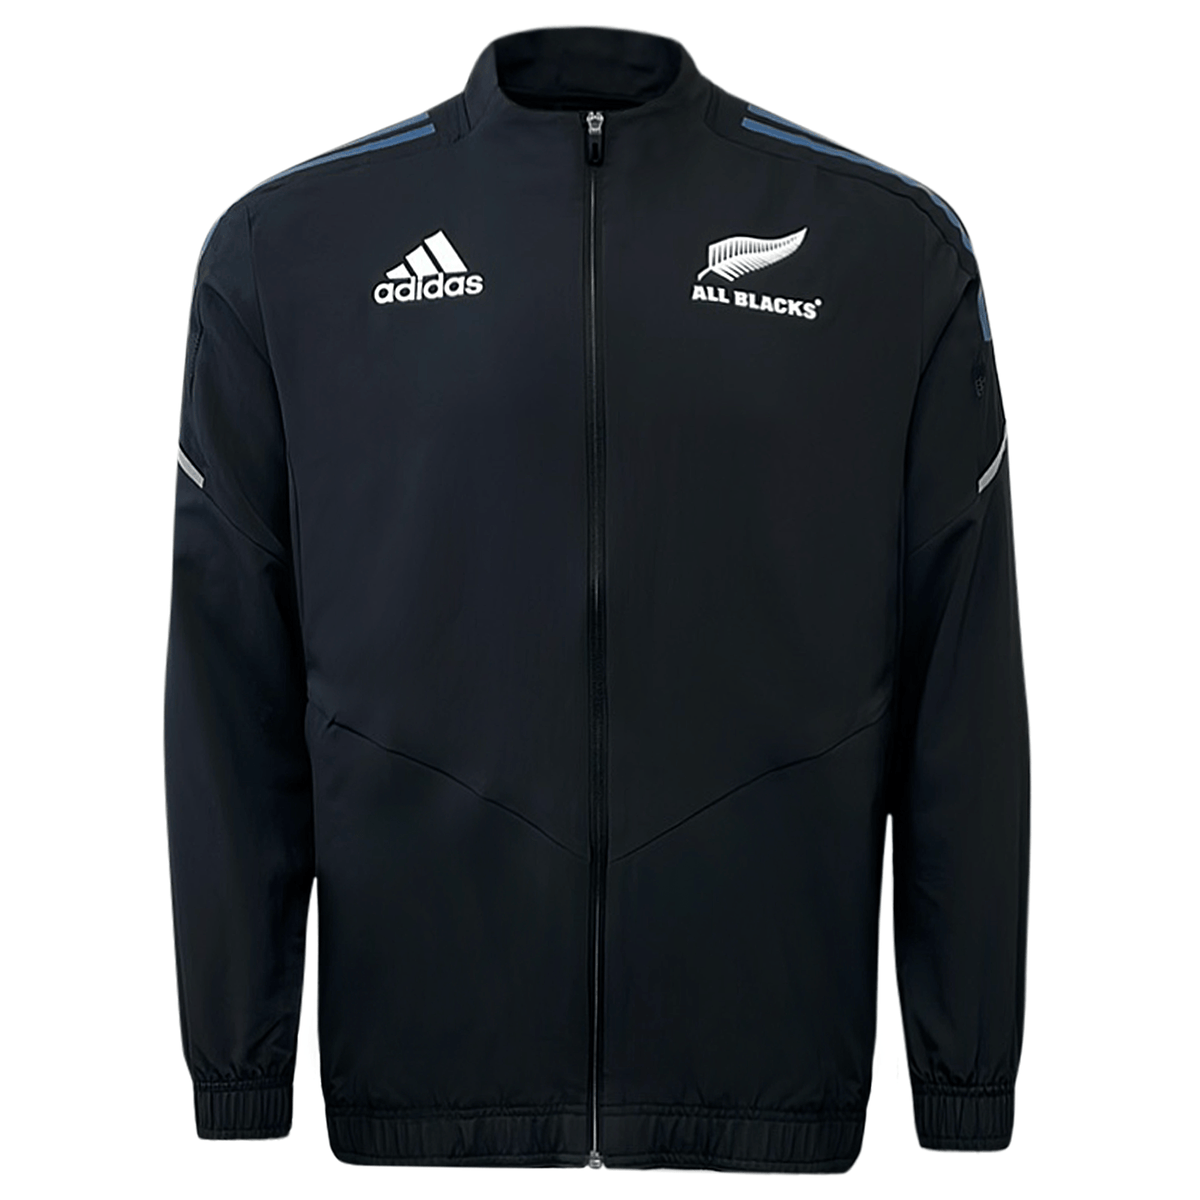 All Blacks Presentation Jacket 22/23 by adidas | New Zealand Rugby Full ...